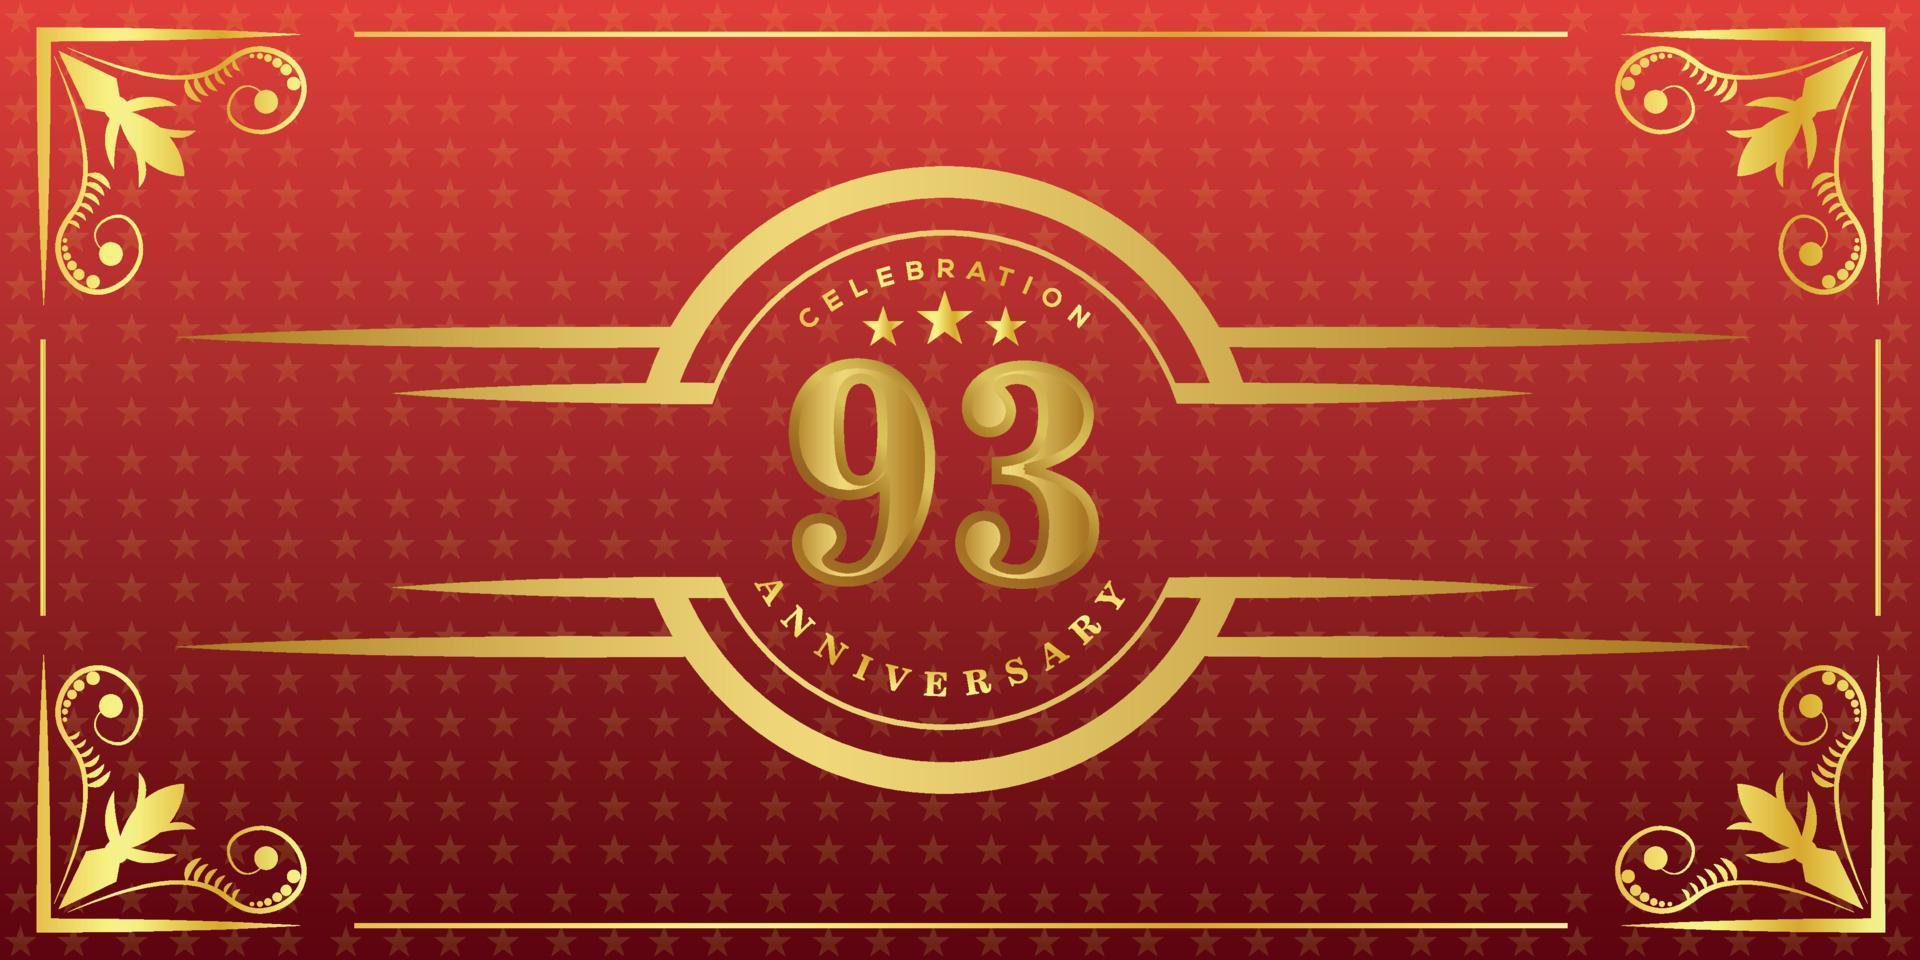 93ste verjaardag logo met gouden ring, confetti en goud grens geïsoleerd Aan elegant rood achtergrond, fonkeling, vector ontwerp voor groet kaart en uitnodiging kaart